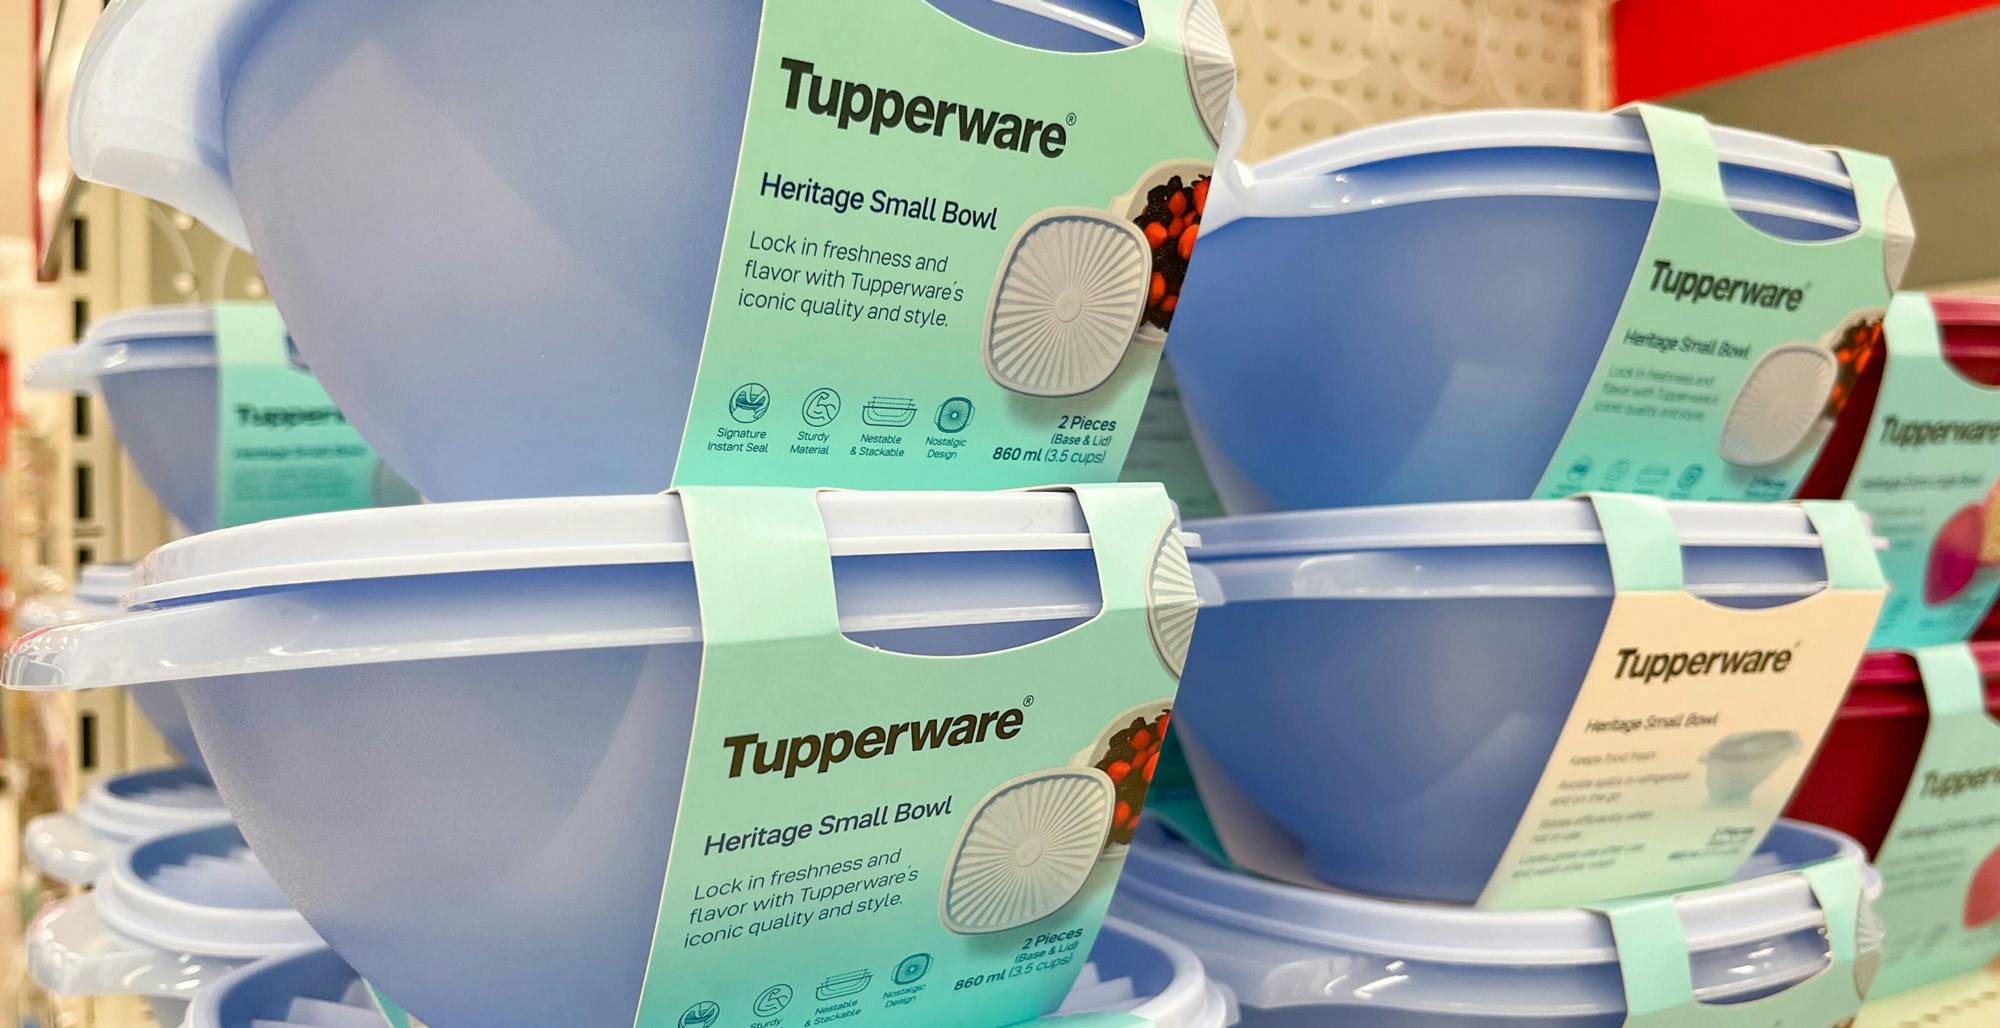 Tupperware is now selling at Target